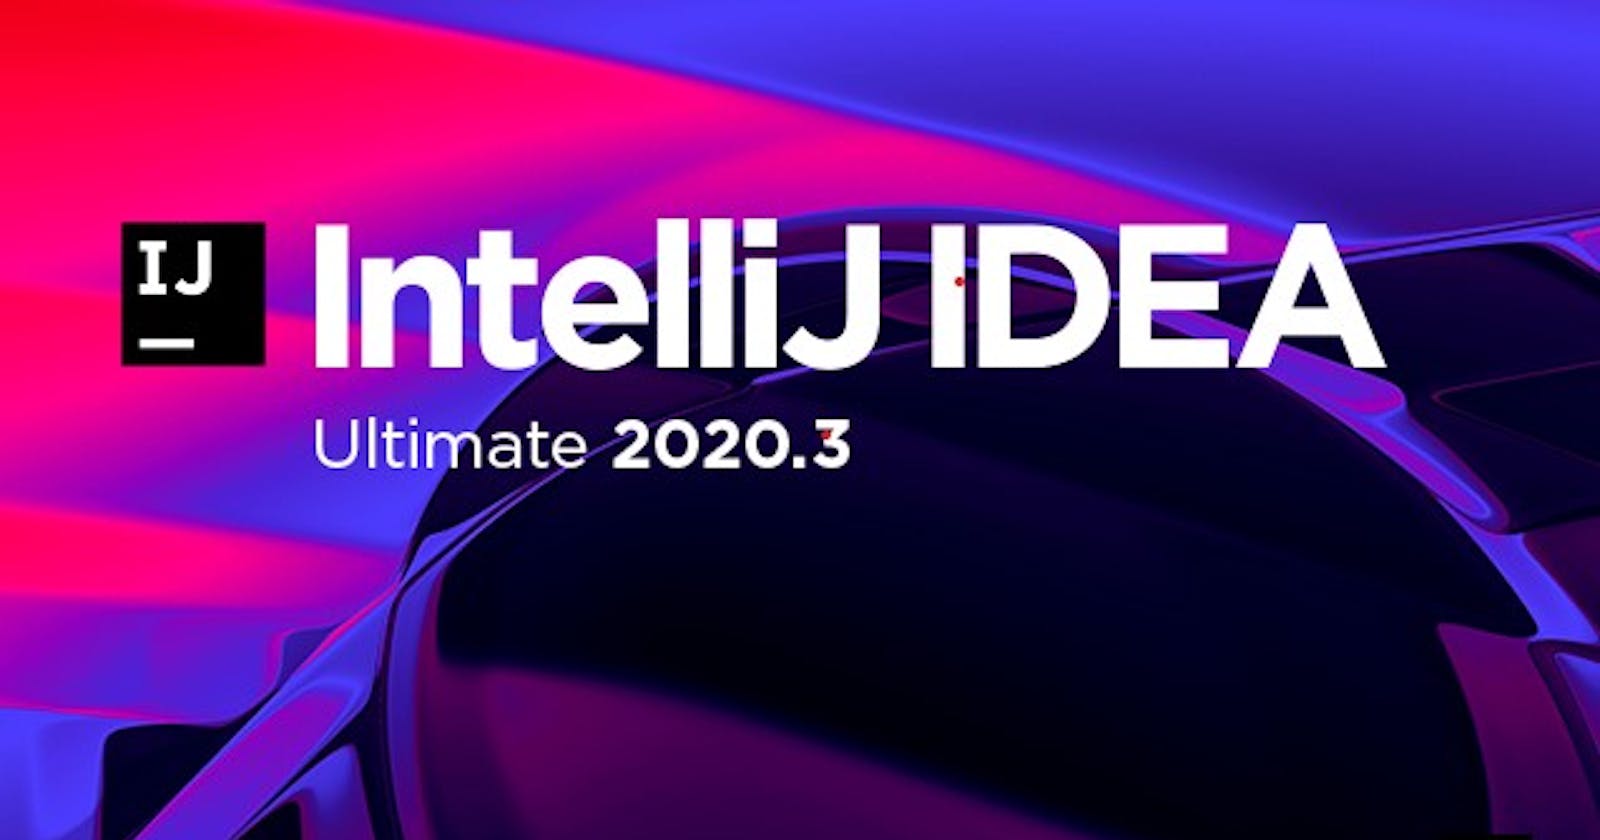 Intellij IDEA 2020.3 Features